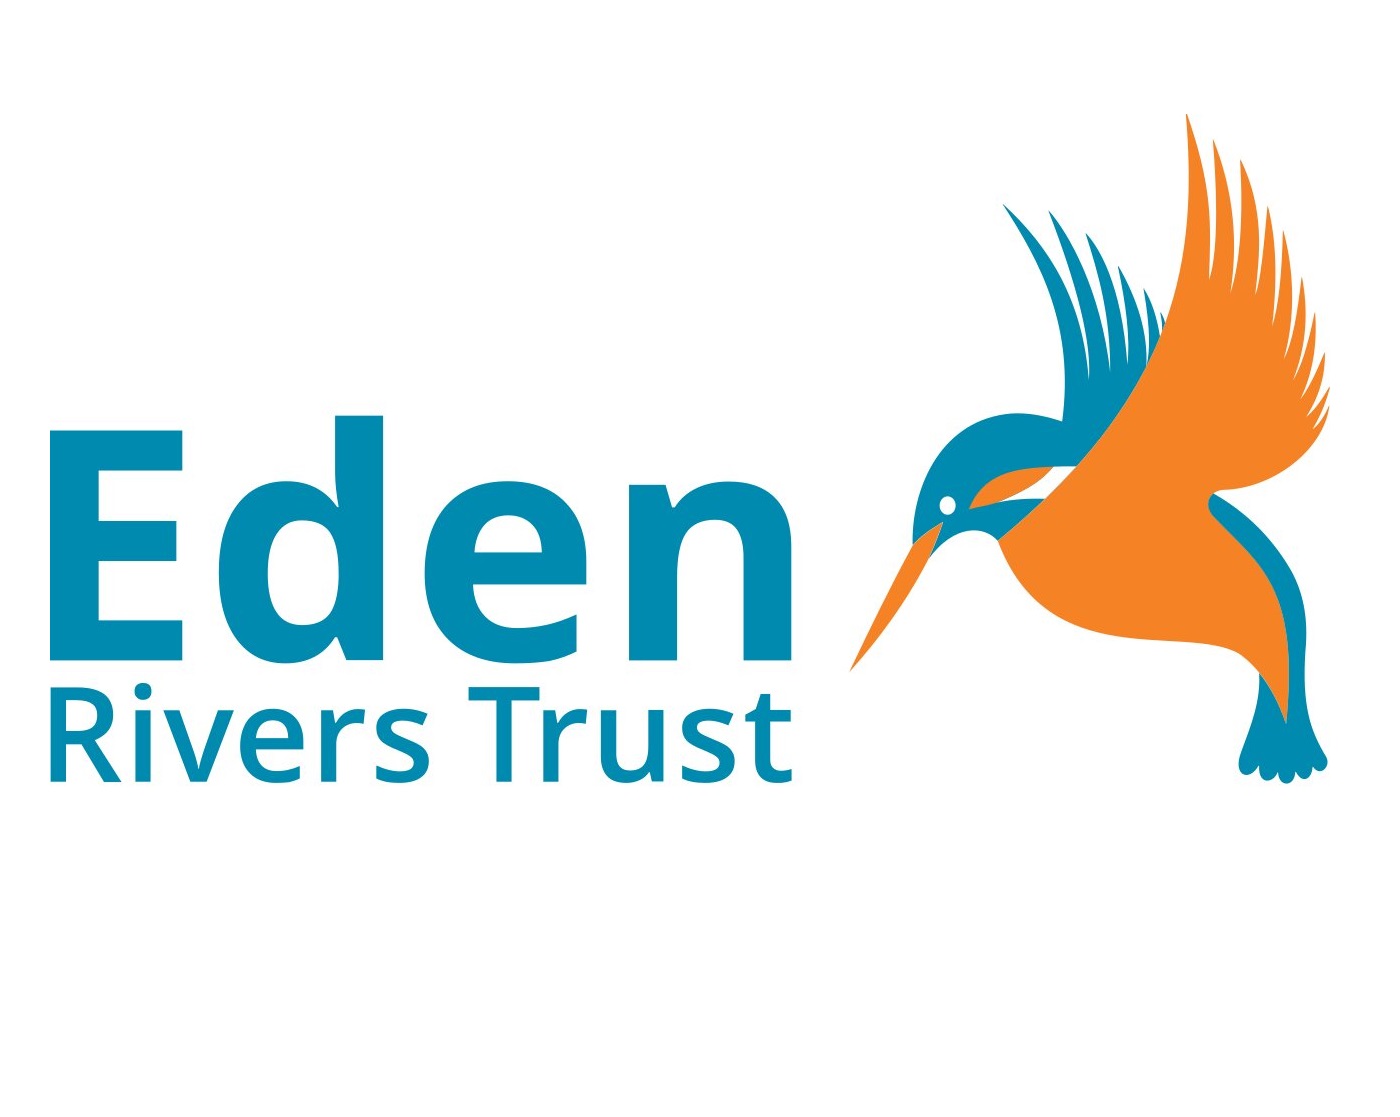 Eden Rivers Trust logo